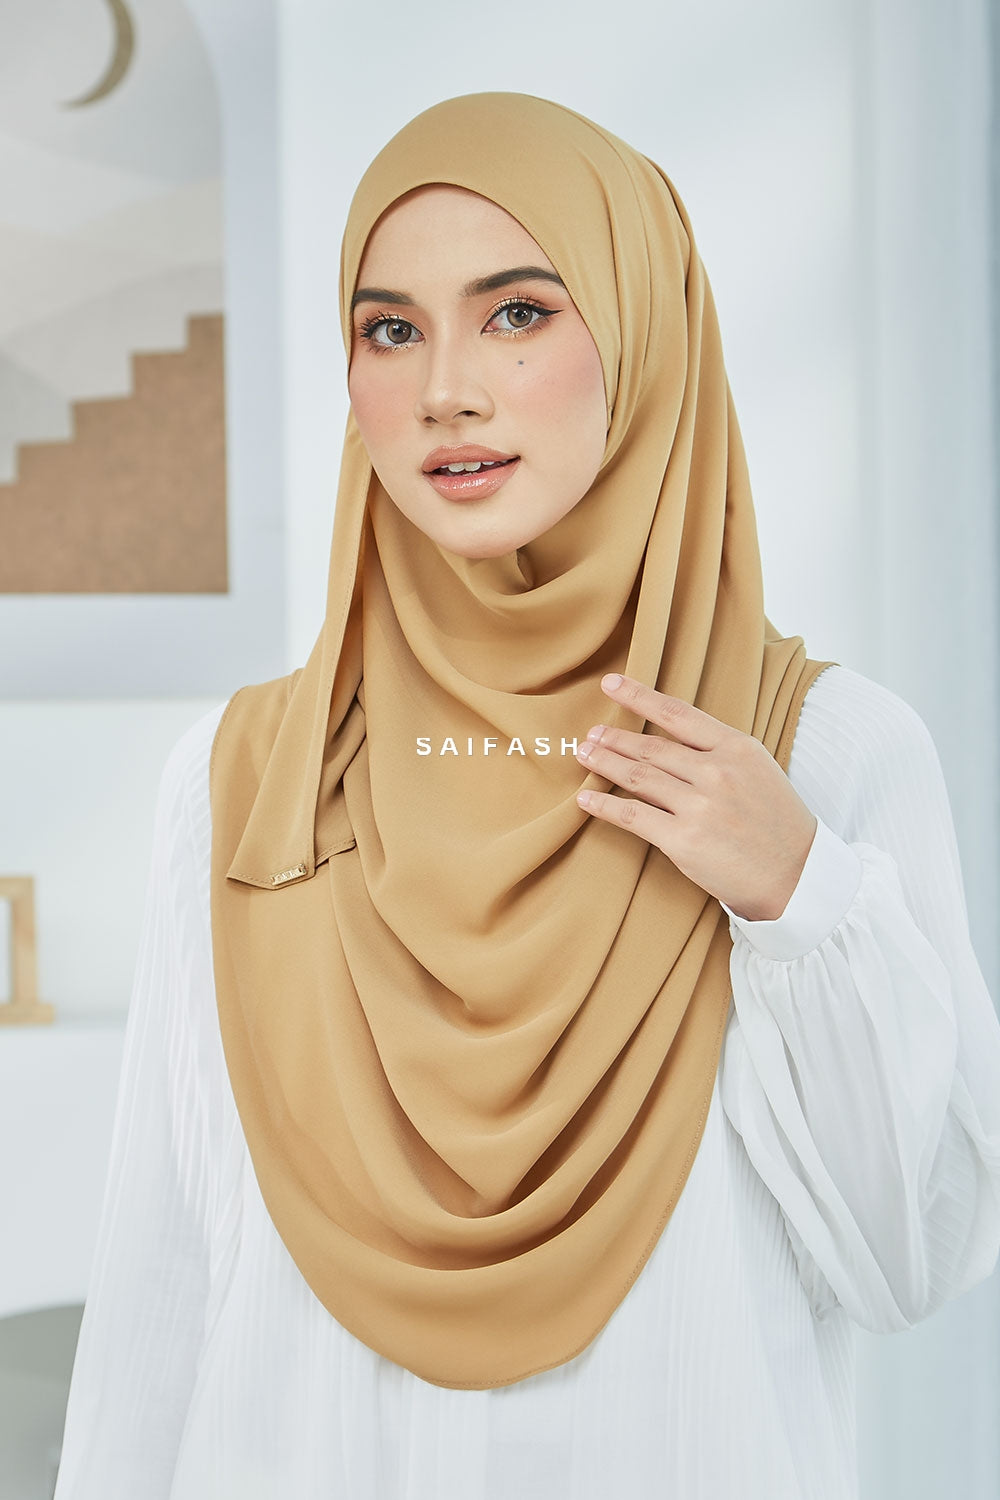 Aralyn Babes Instant Hijab in Hazelnut